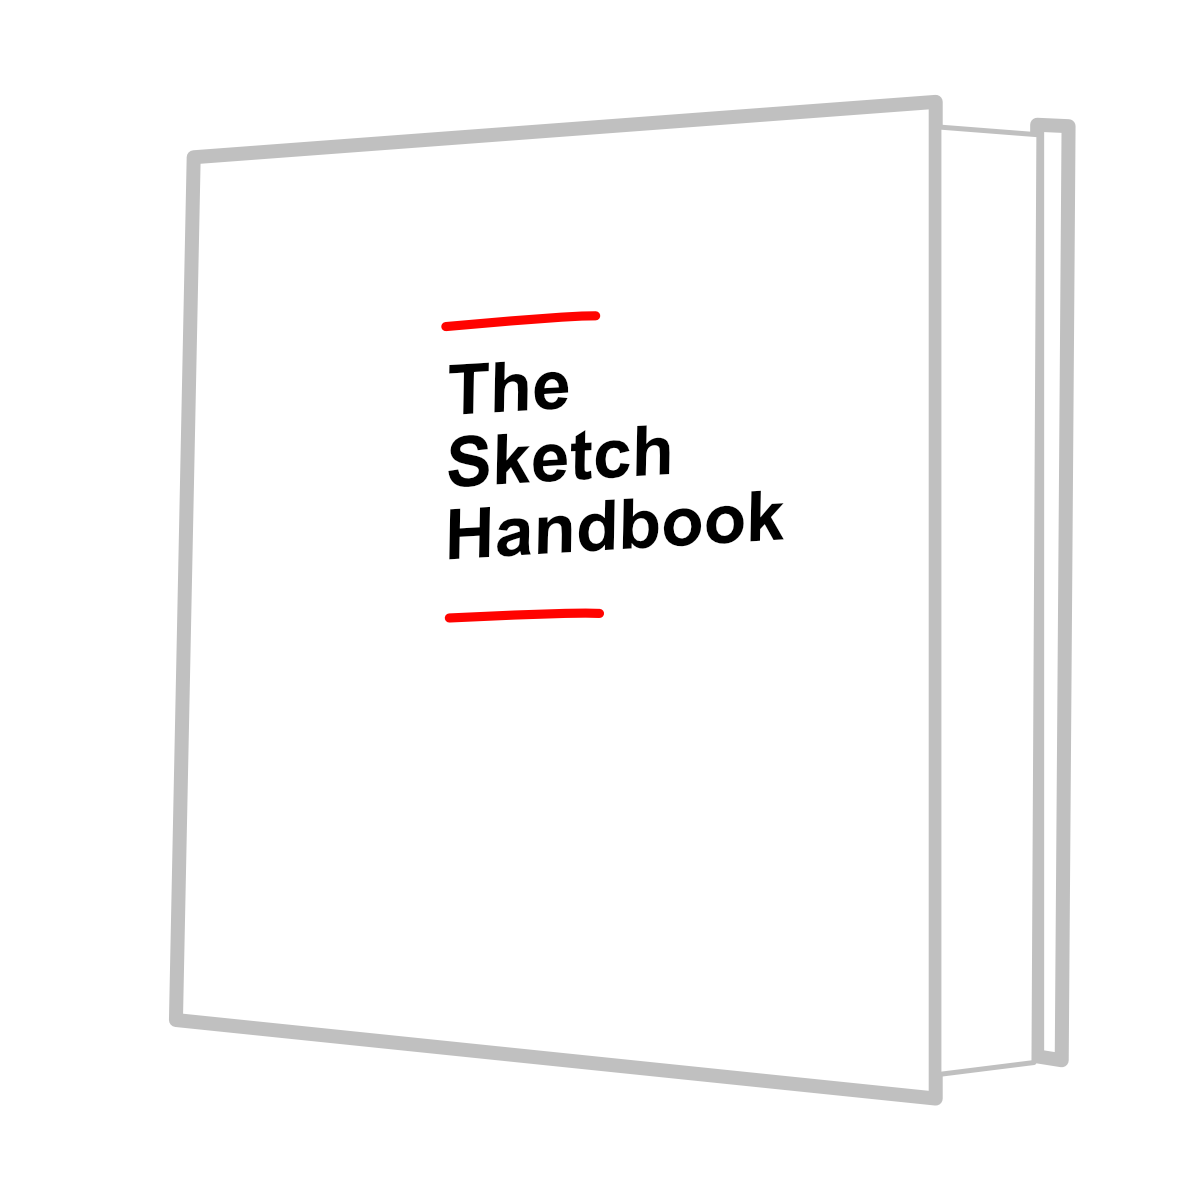 The Sketch Handbook book cover